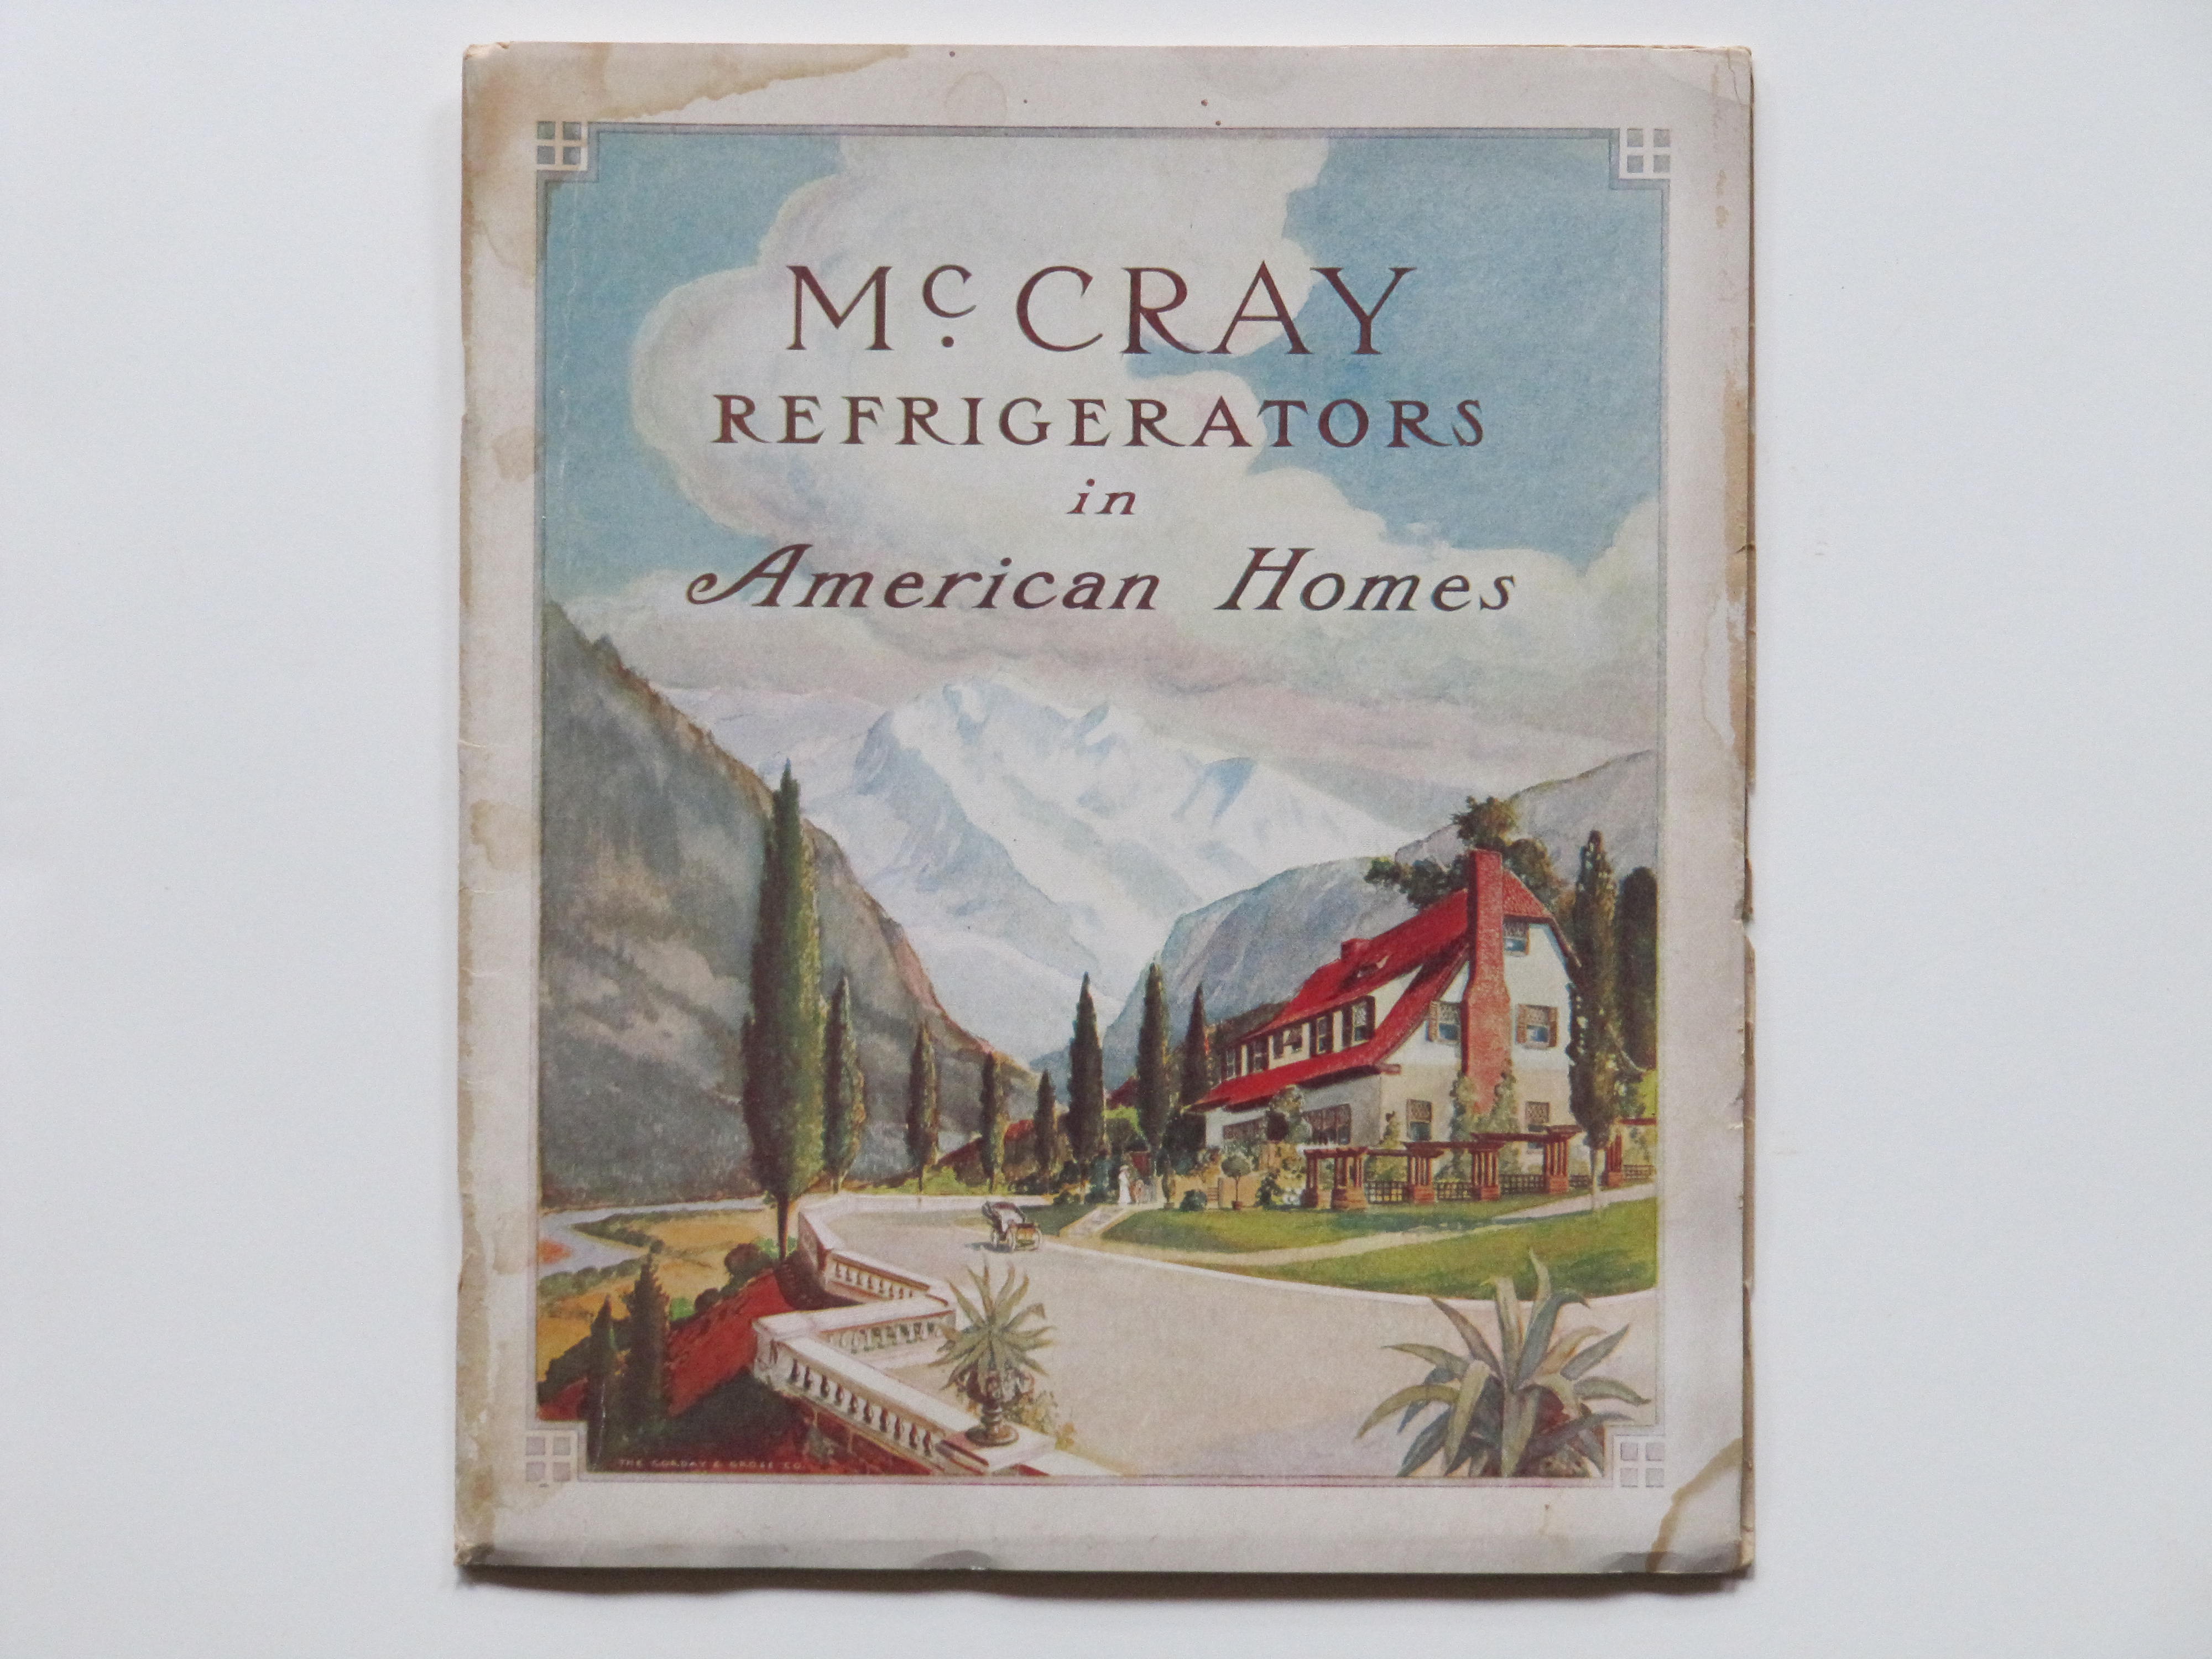 McCray Refrigerators in Amer homes